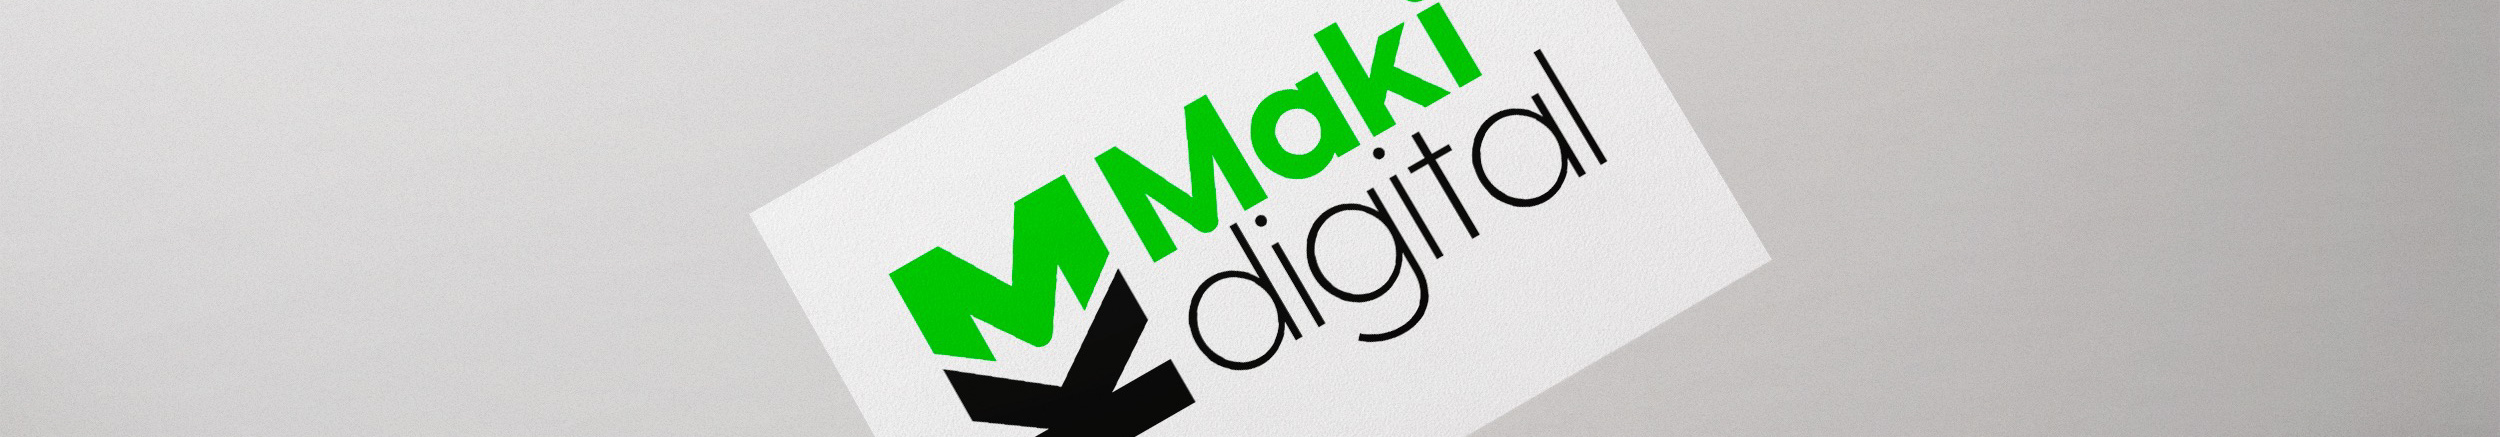 Bannière de profil de Maki Digital